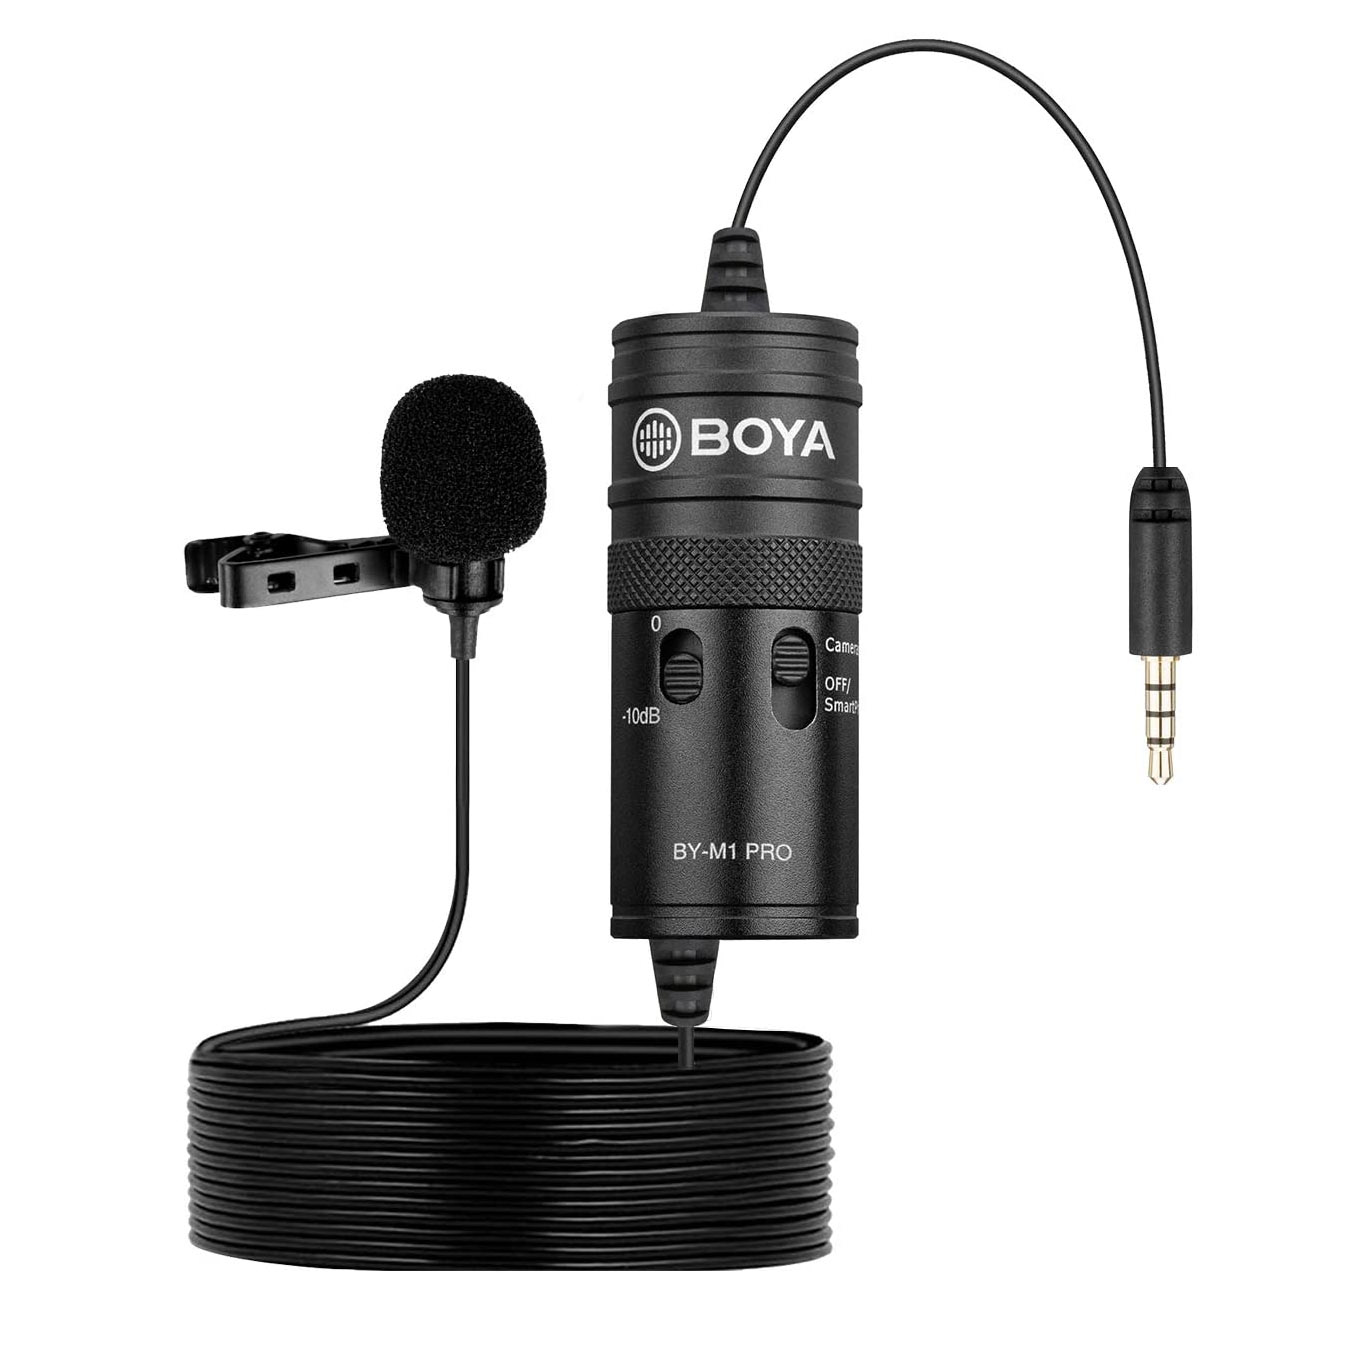 Micrófono corbatero doble omni direccional Boya BY-M1DM - FotoAcces